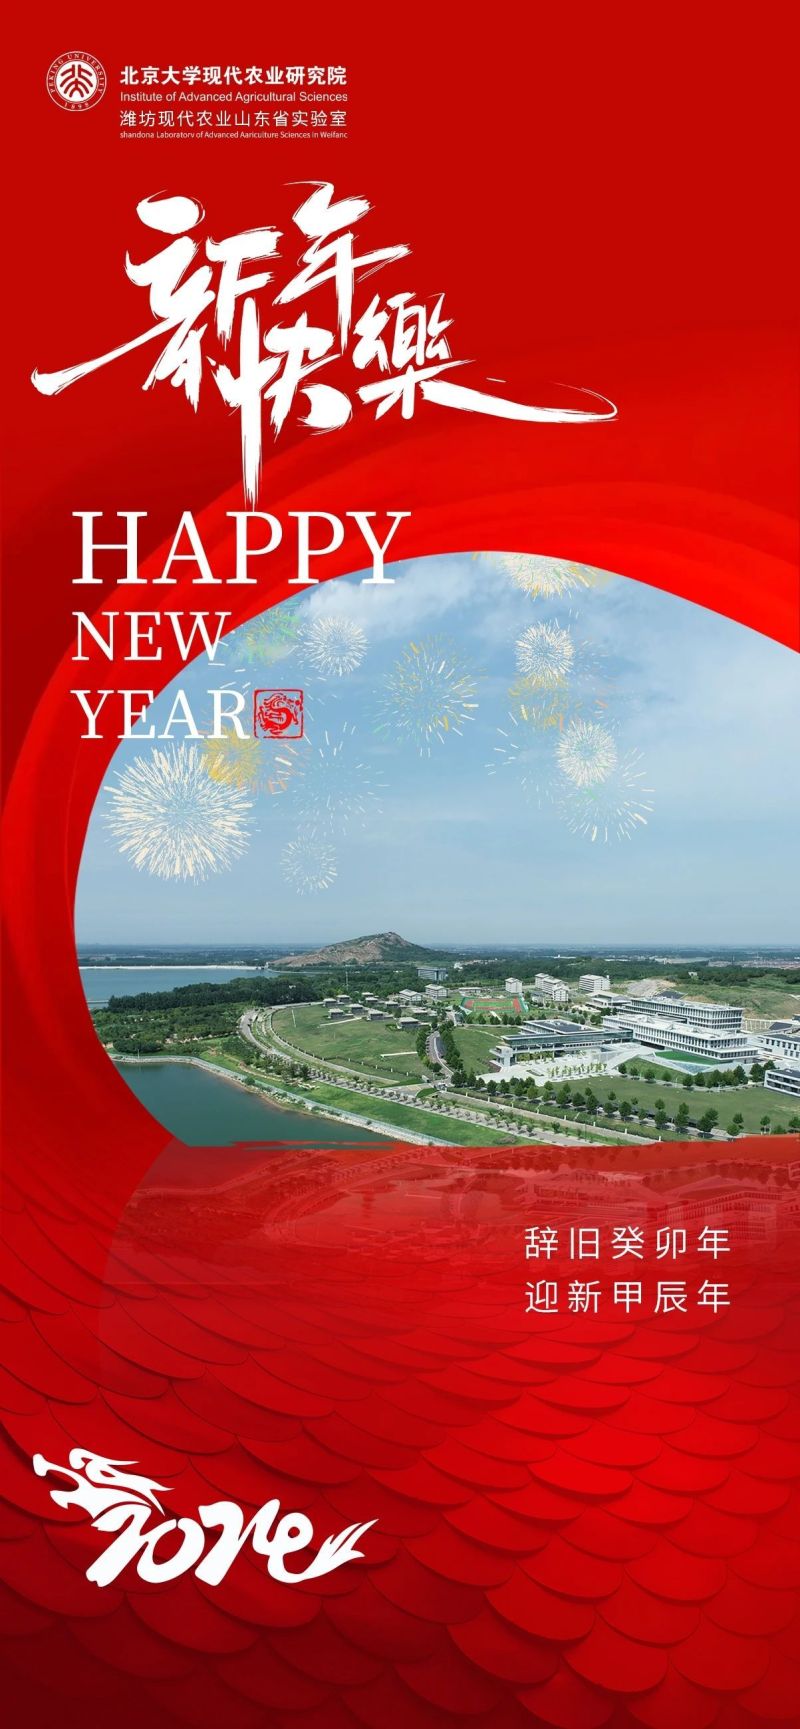 Xingping Zhang on LinkedIn: Happy new year!!!